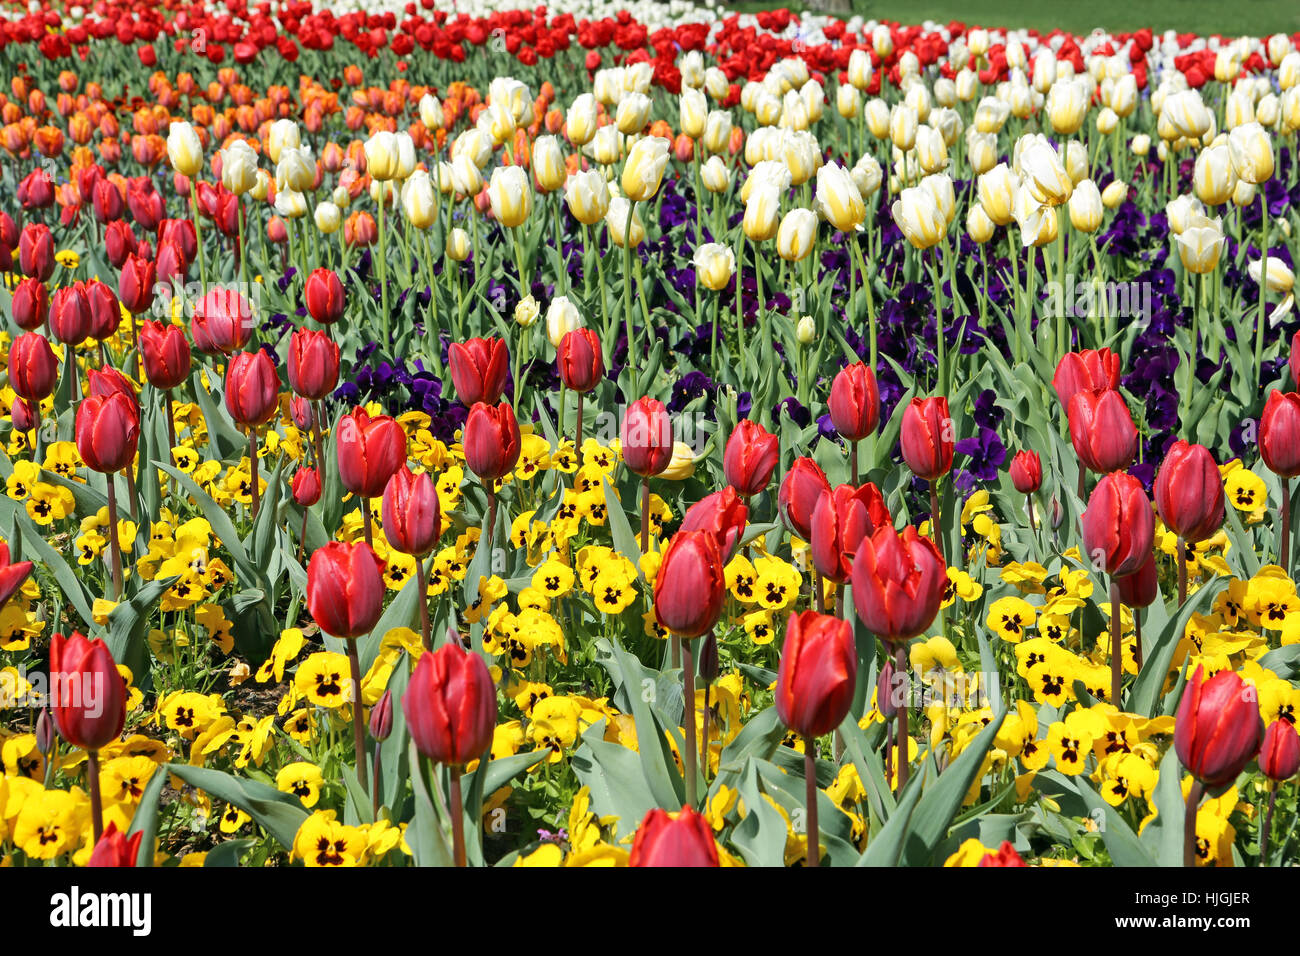 Flower, piante, fiori, flora, botanica, tulipani, tulip, fiori, piante, colorati, Foto Stock